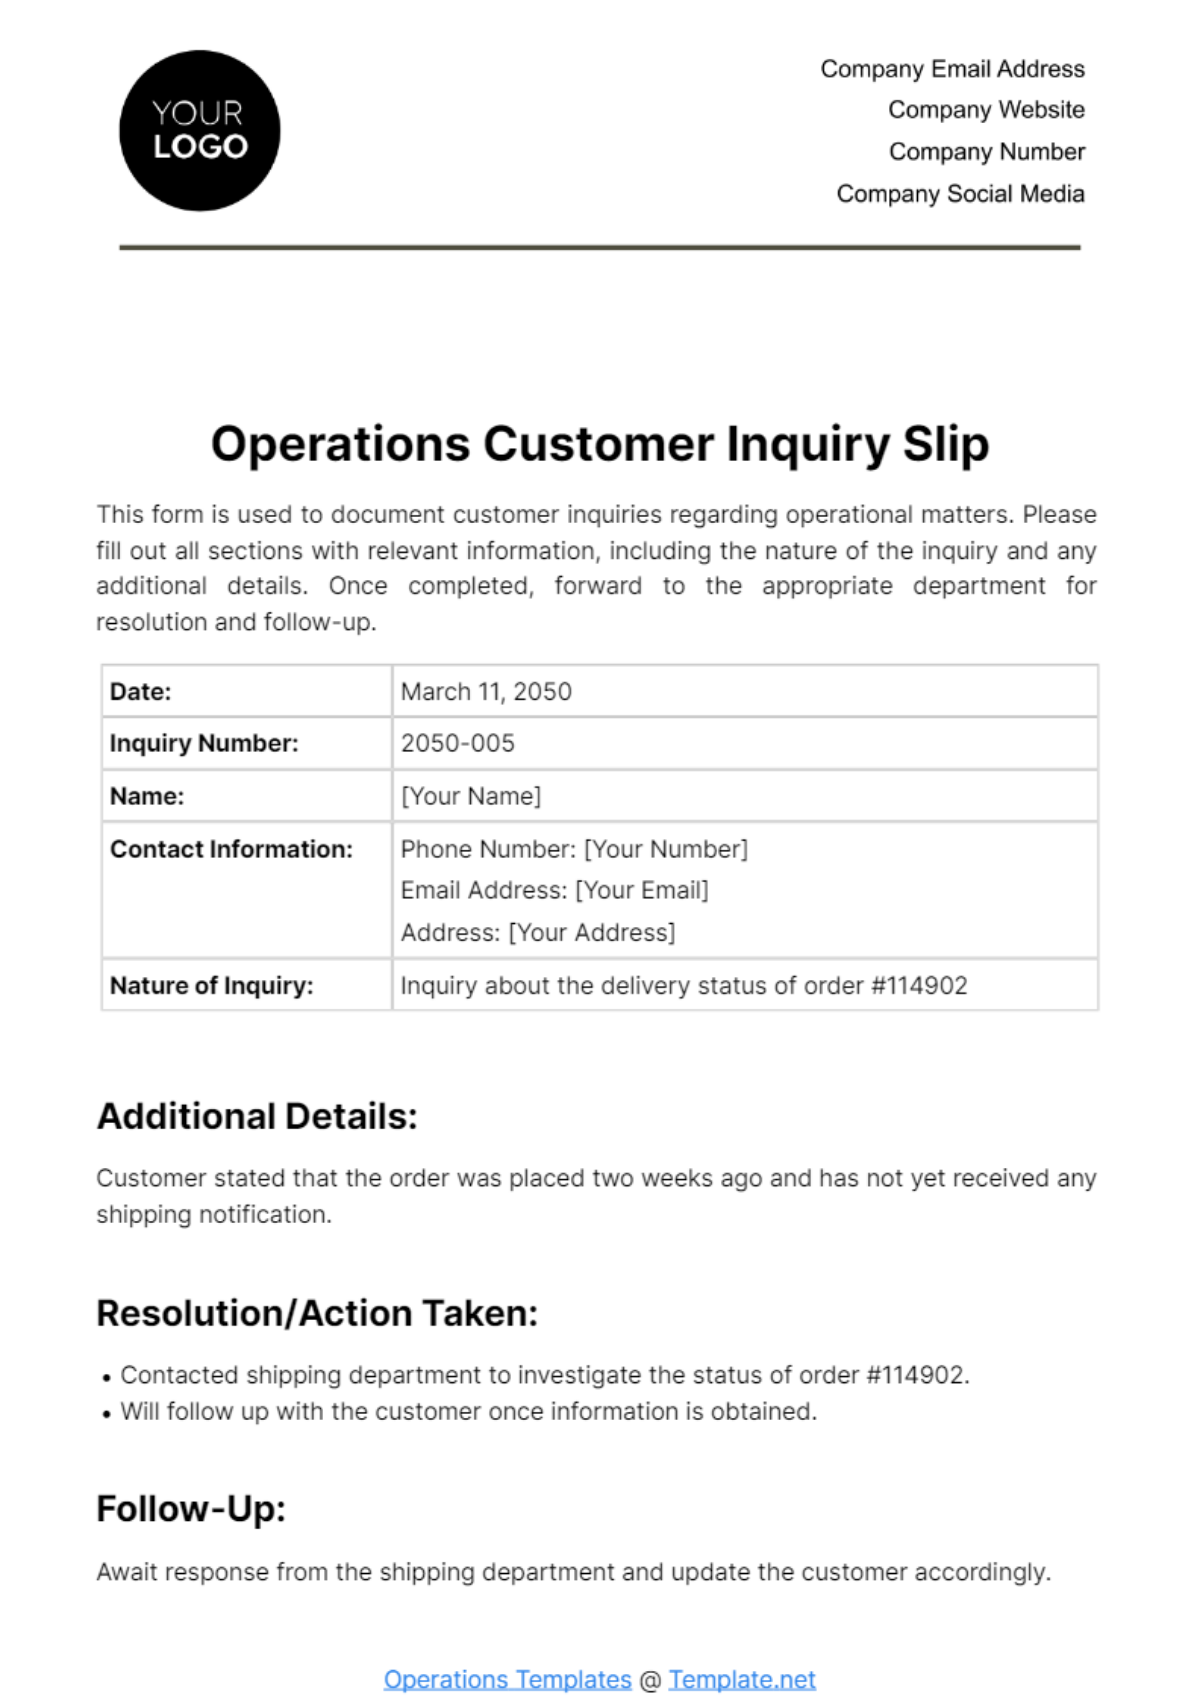 Operations Customer Inquiry Slip Template